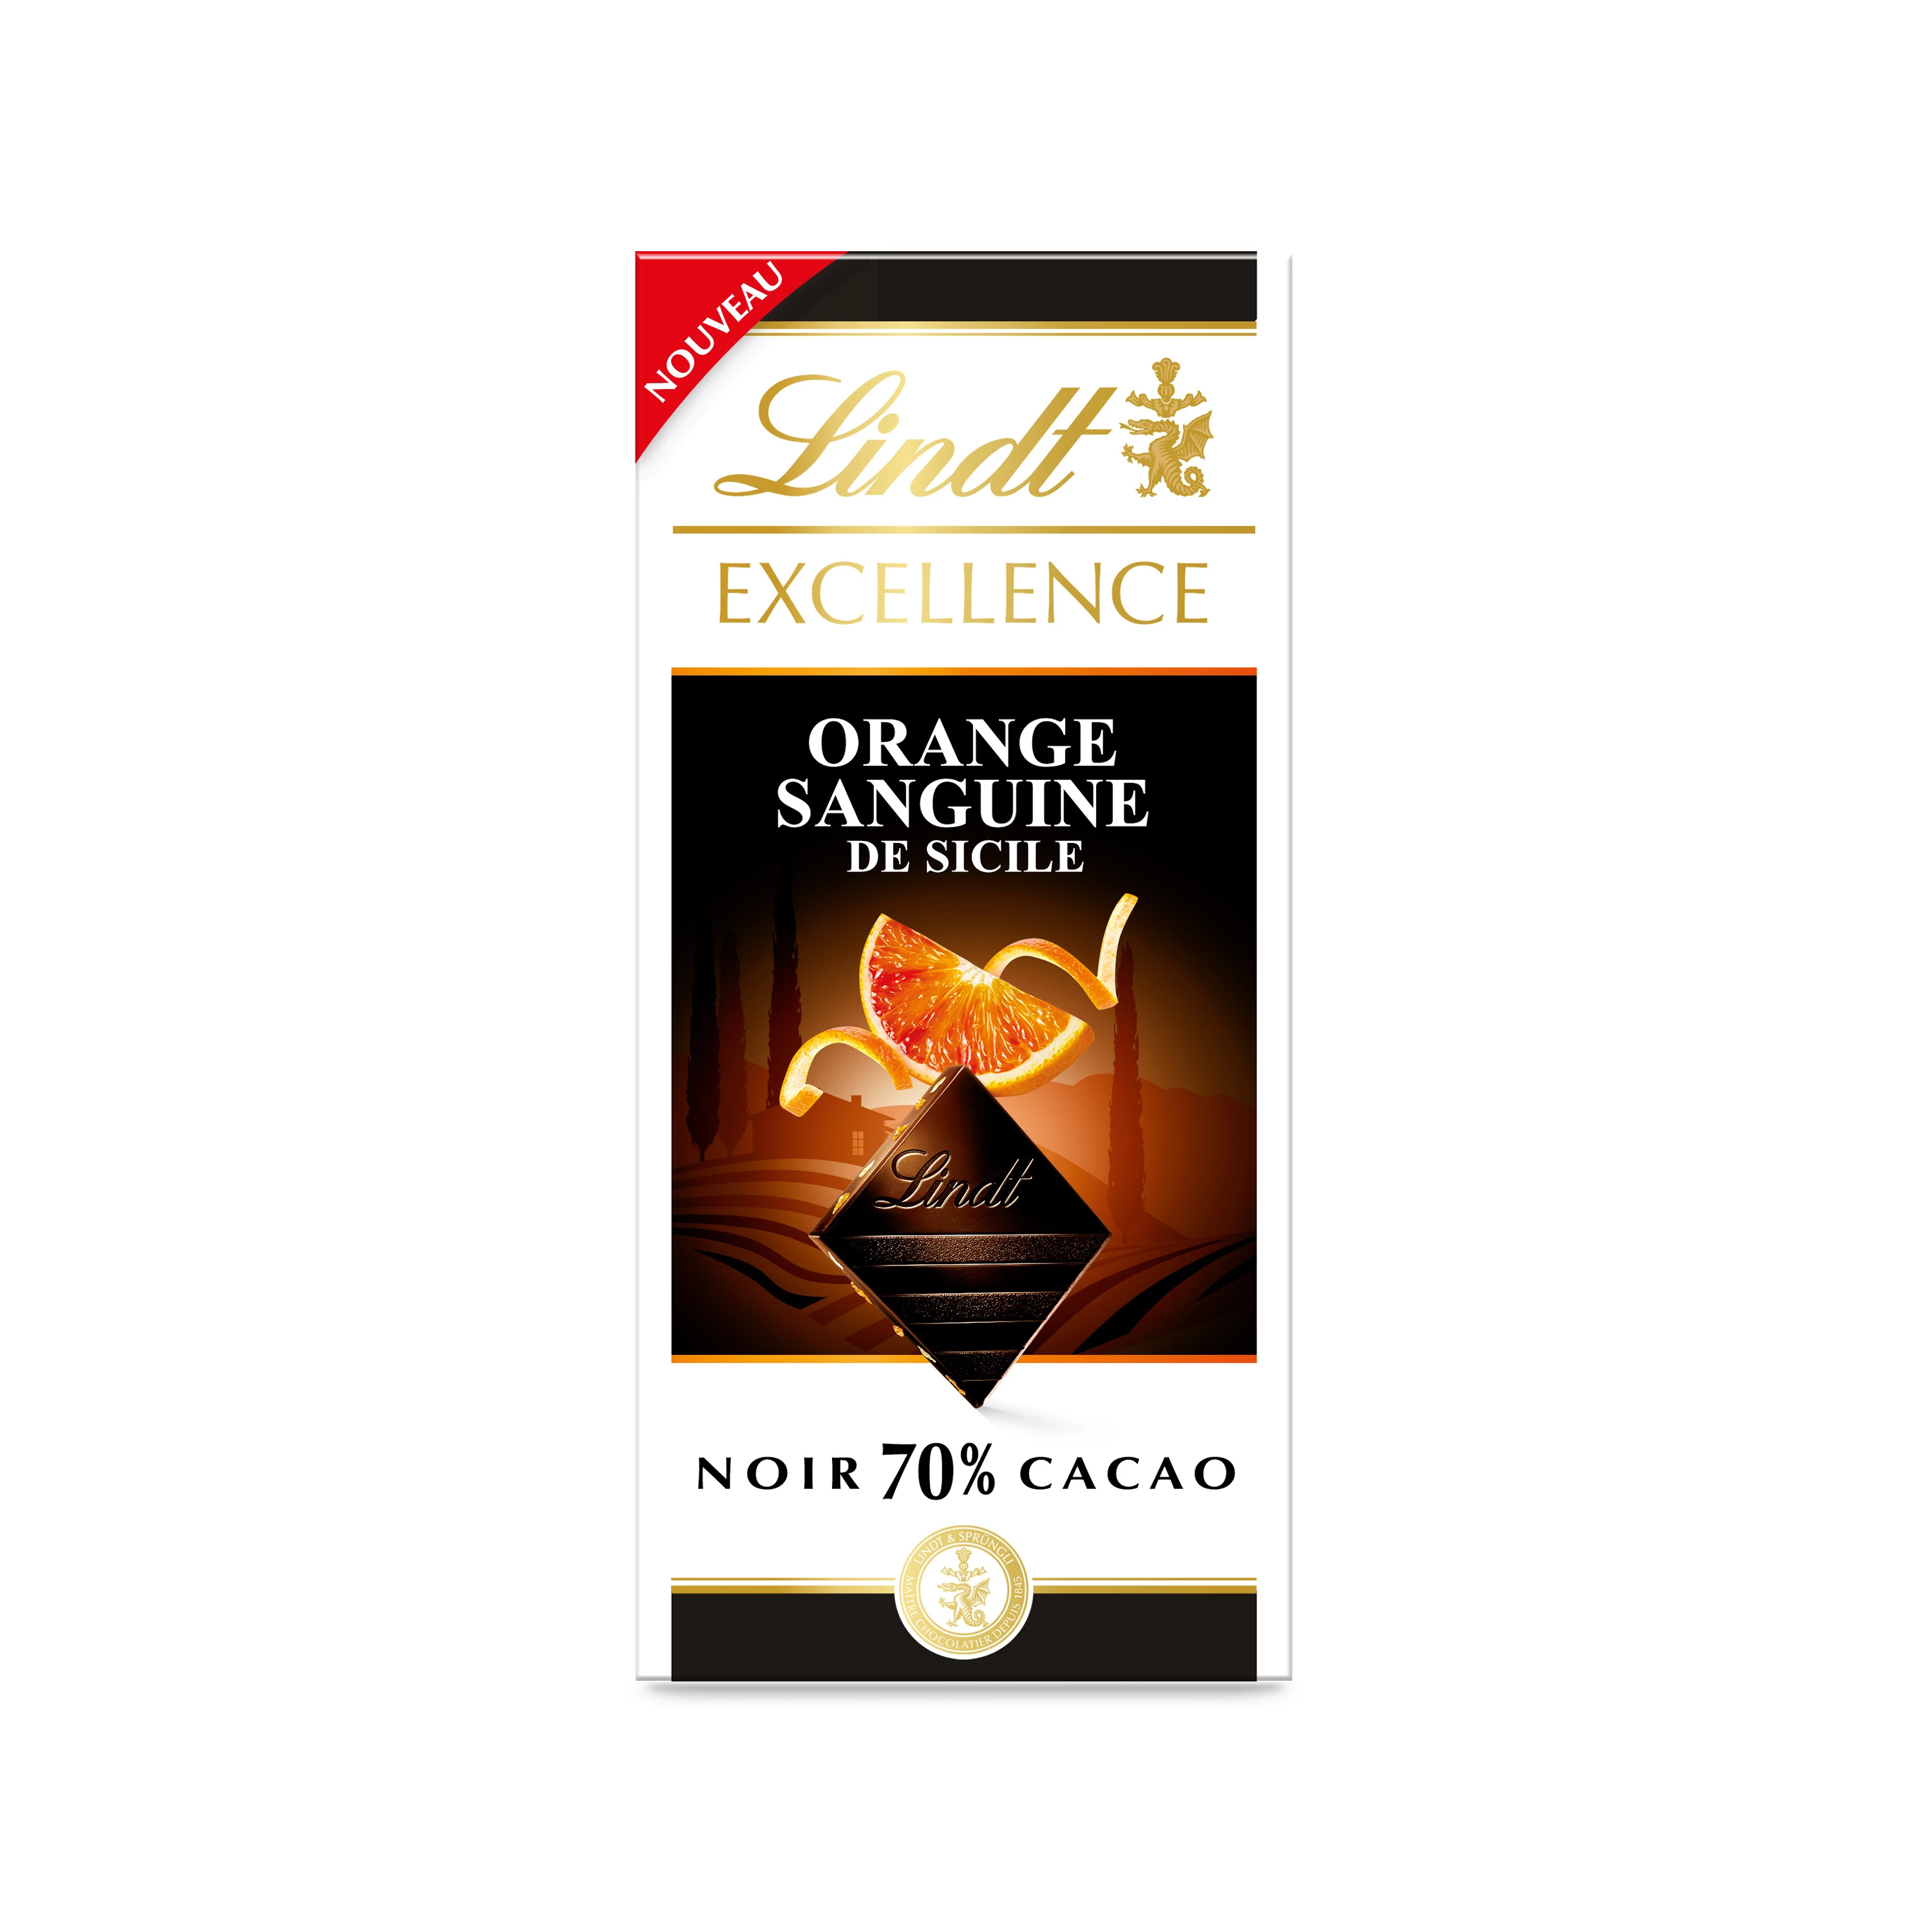 Excellence Noir 70% Cacao  Orange Sanguine De Sicile Tablette 100 G - LINDT